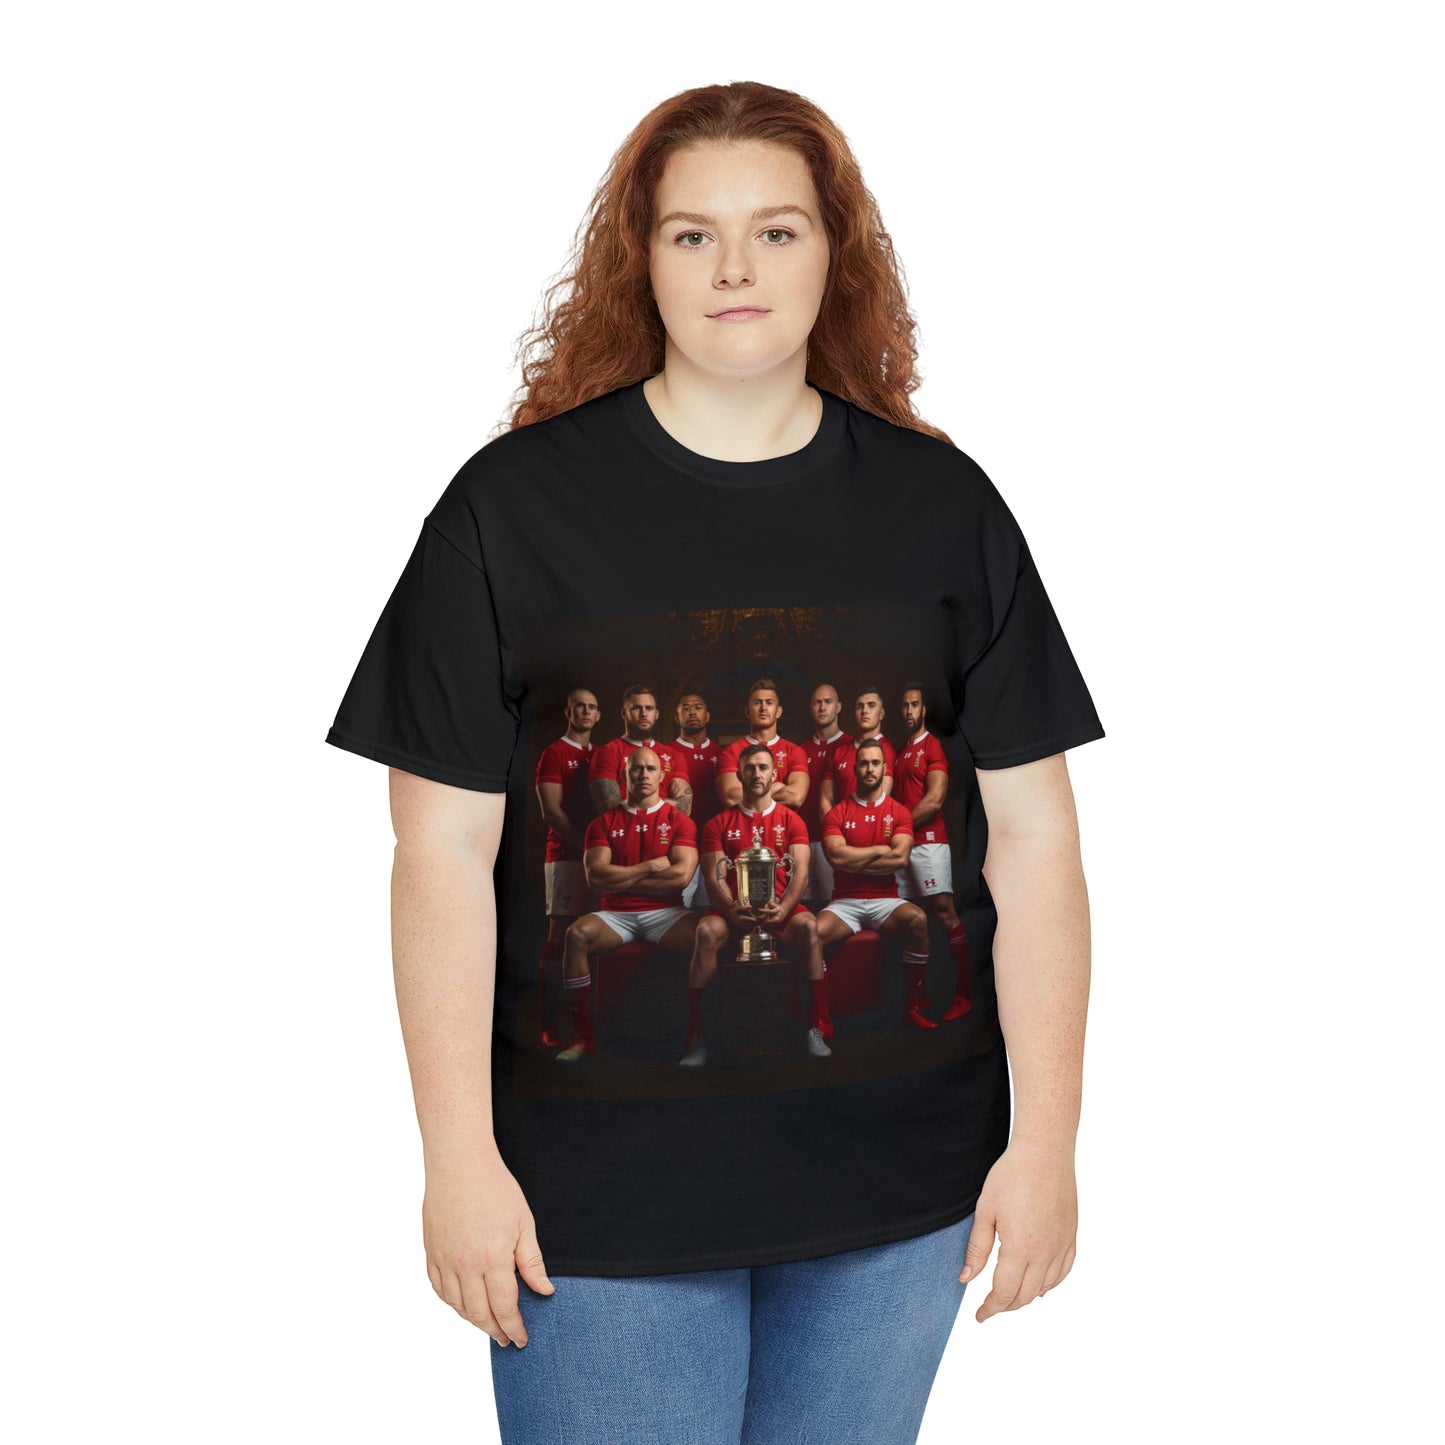 Wales RWC Photoshoot - dark shirts